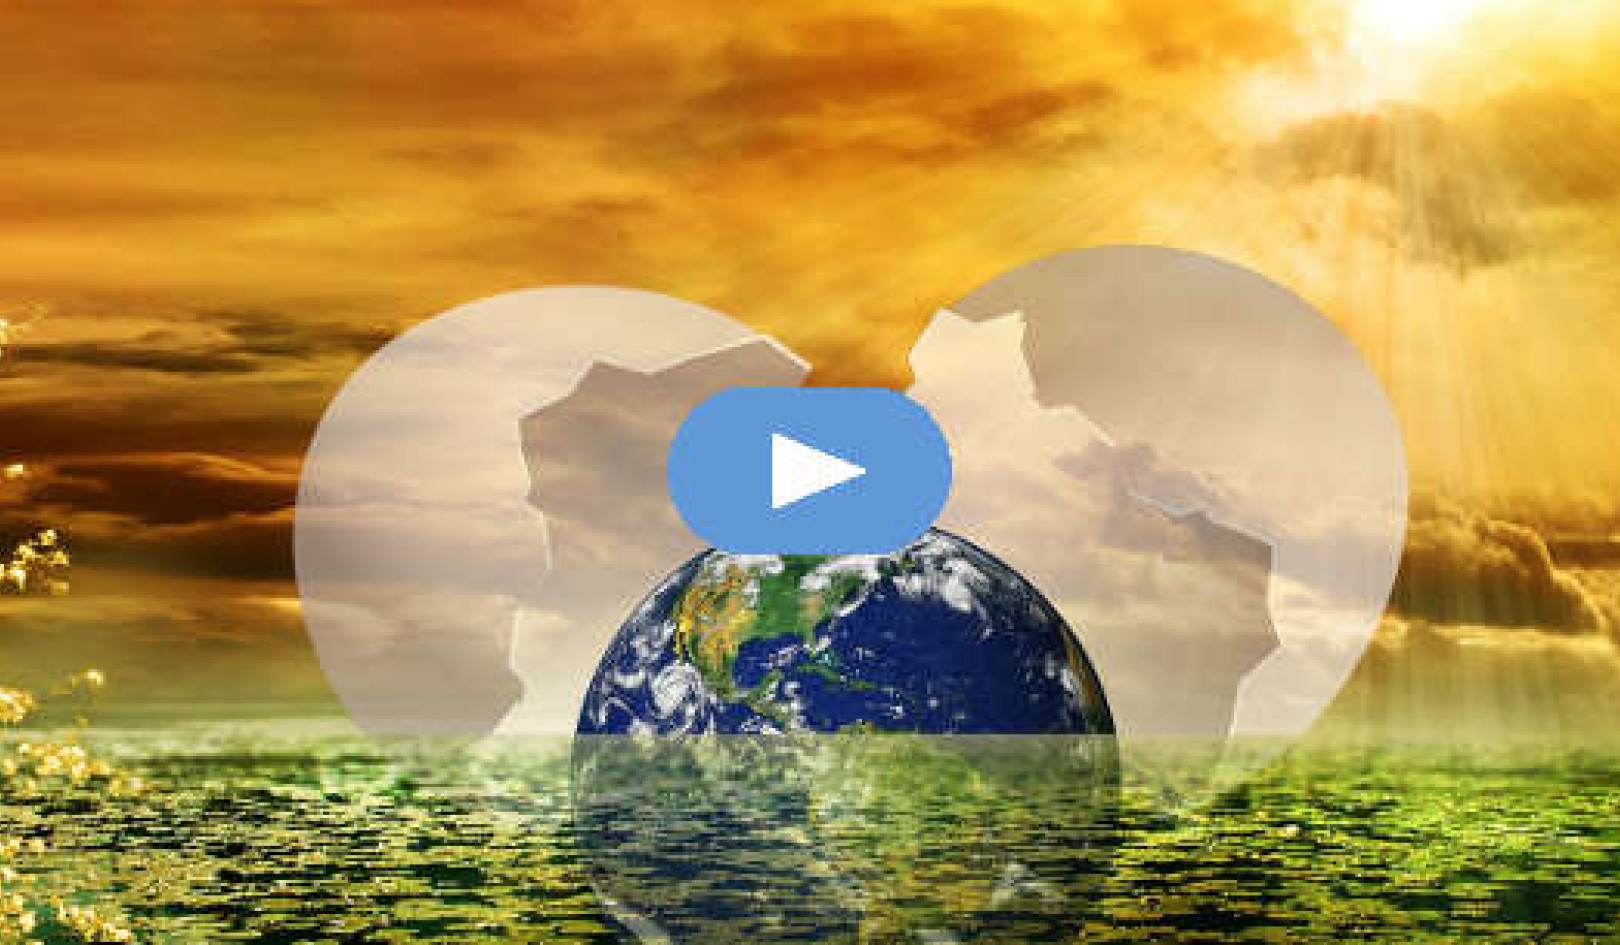 Menjadi Seimbang dalam Perubahan Dunia (Video)